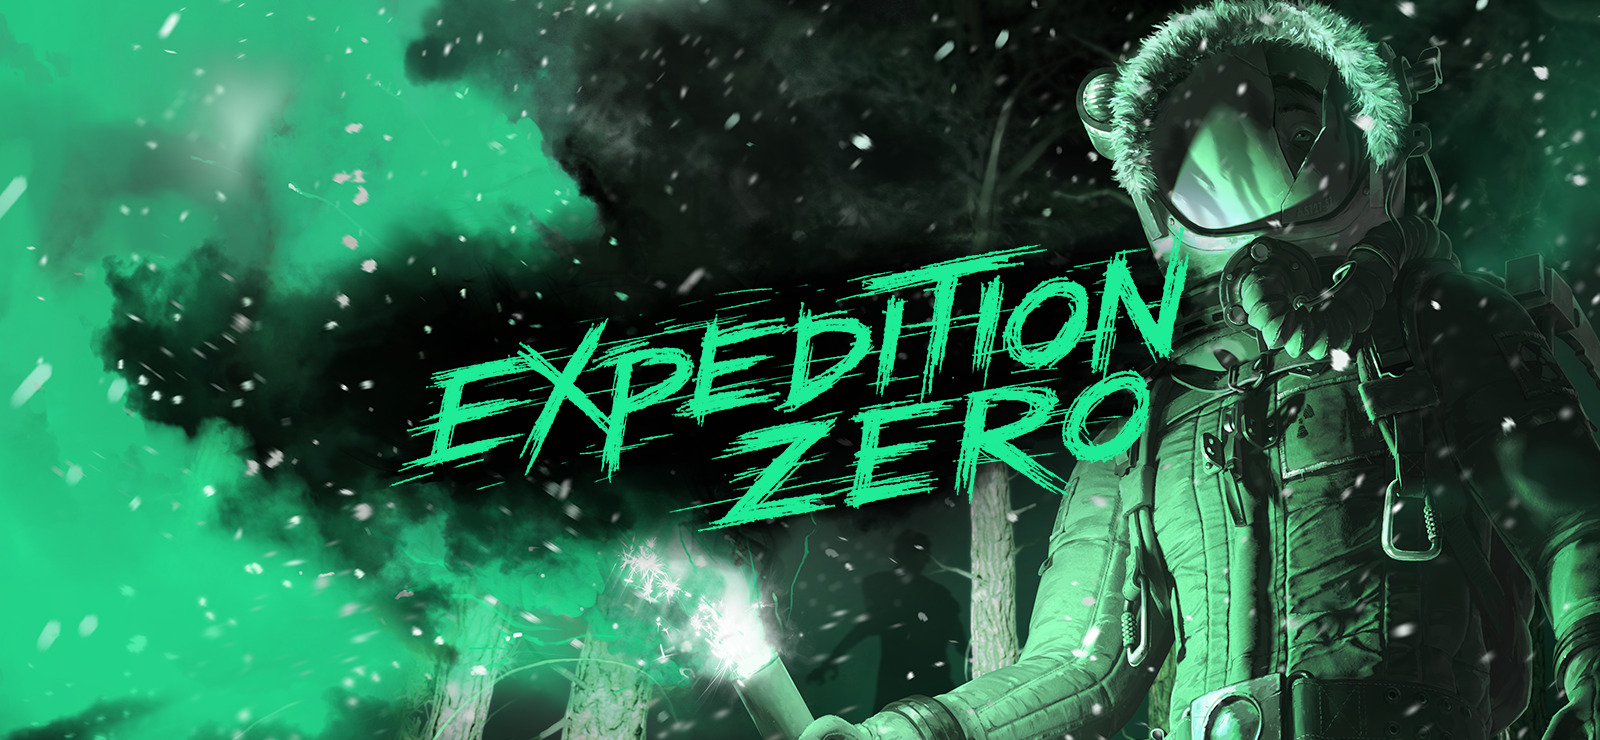 Download Expedition Zero v1.11.1-GOG